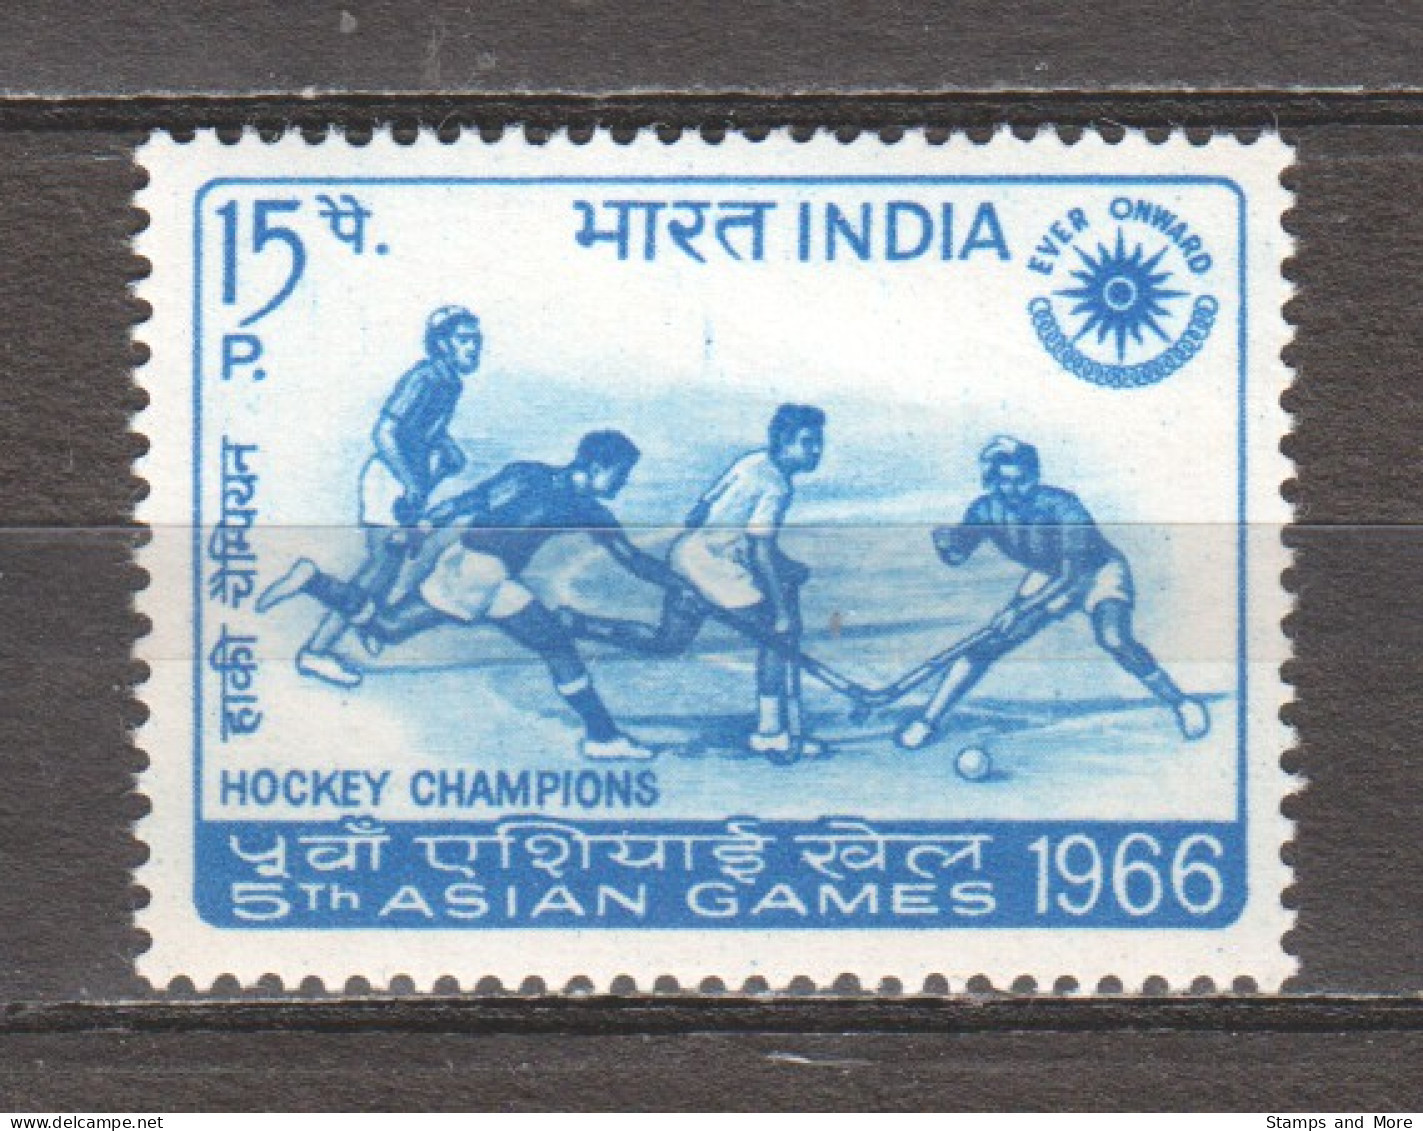 India 1966 Mi 420 MNH ASIAN GAMES - FIELD HOCKEY - Hockey (sur Gazon)